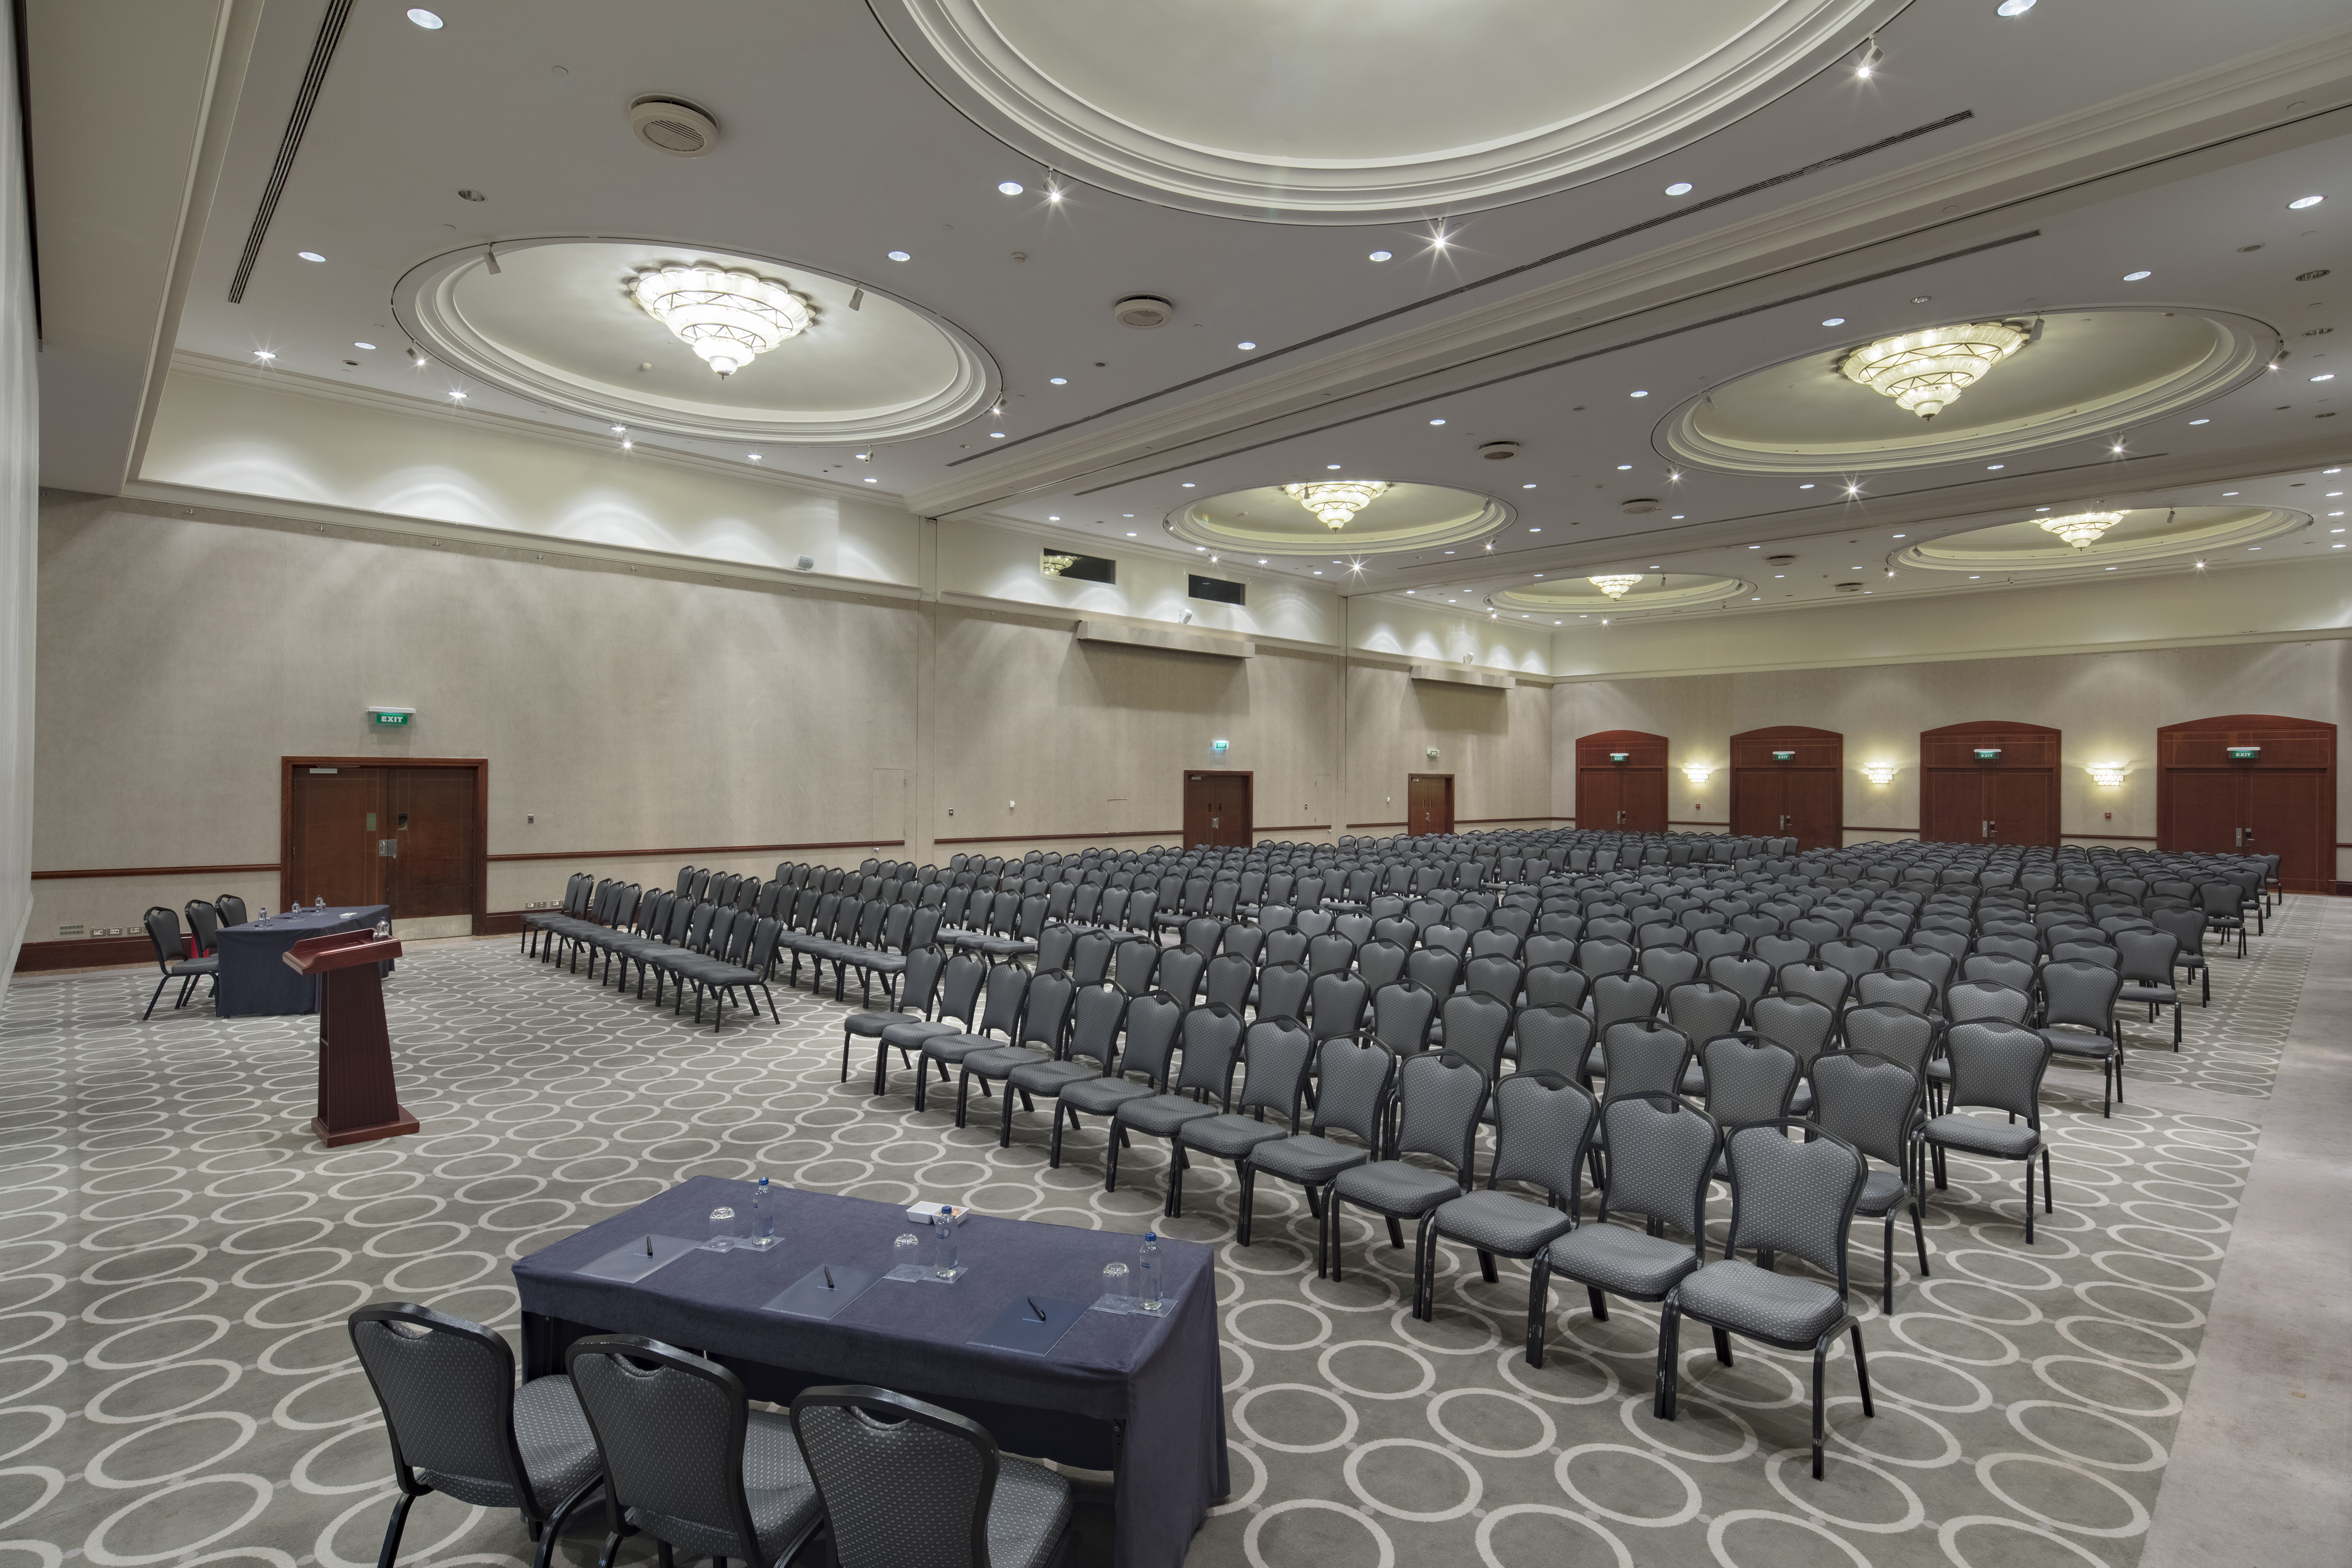 Adana HiltonSA Ball Room Combined Theatre Style